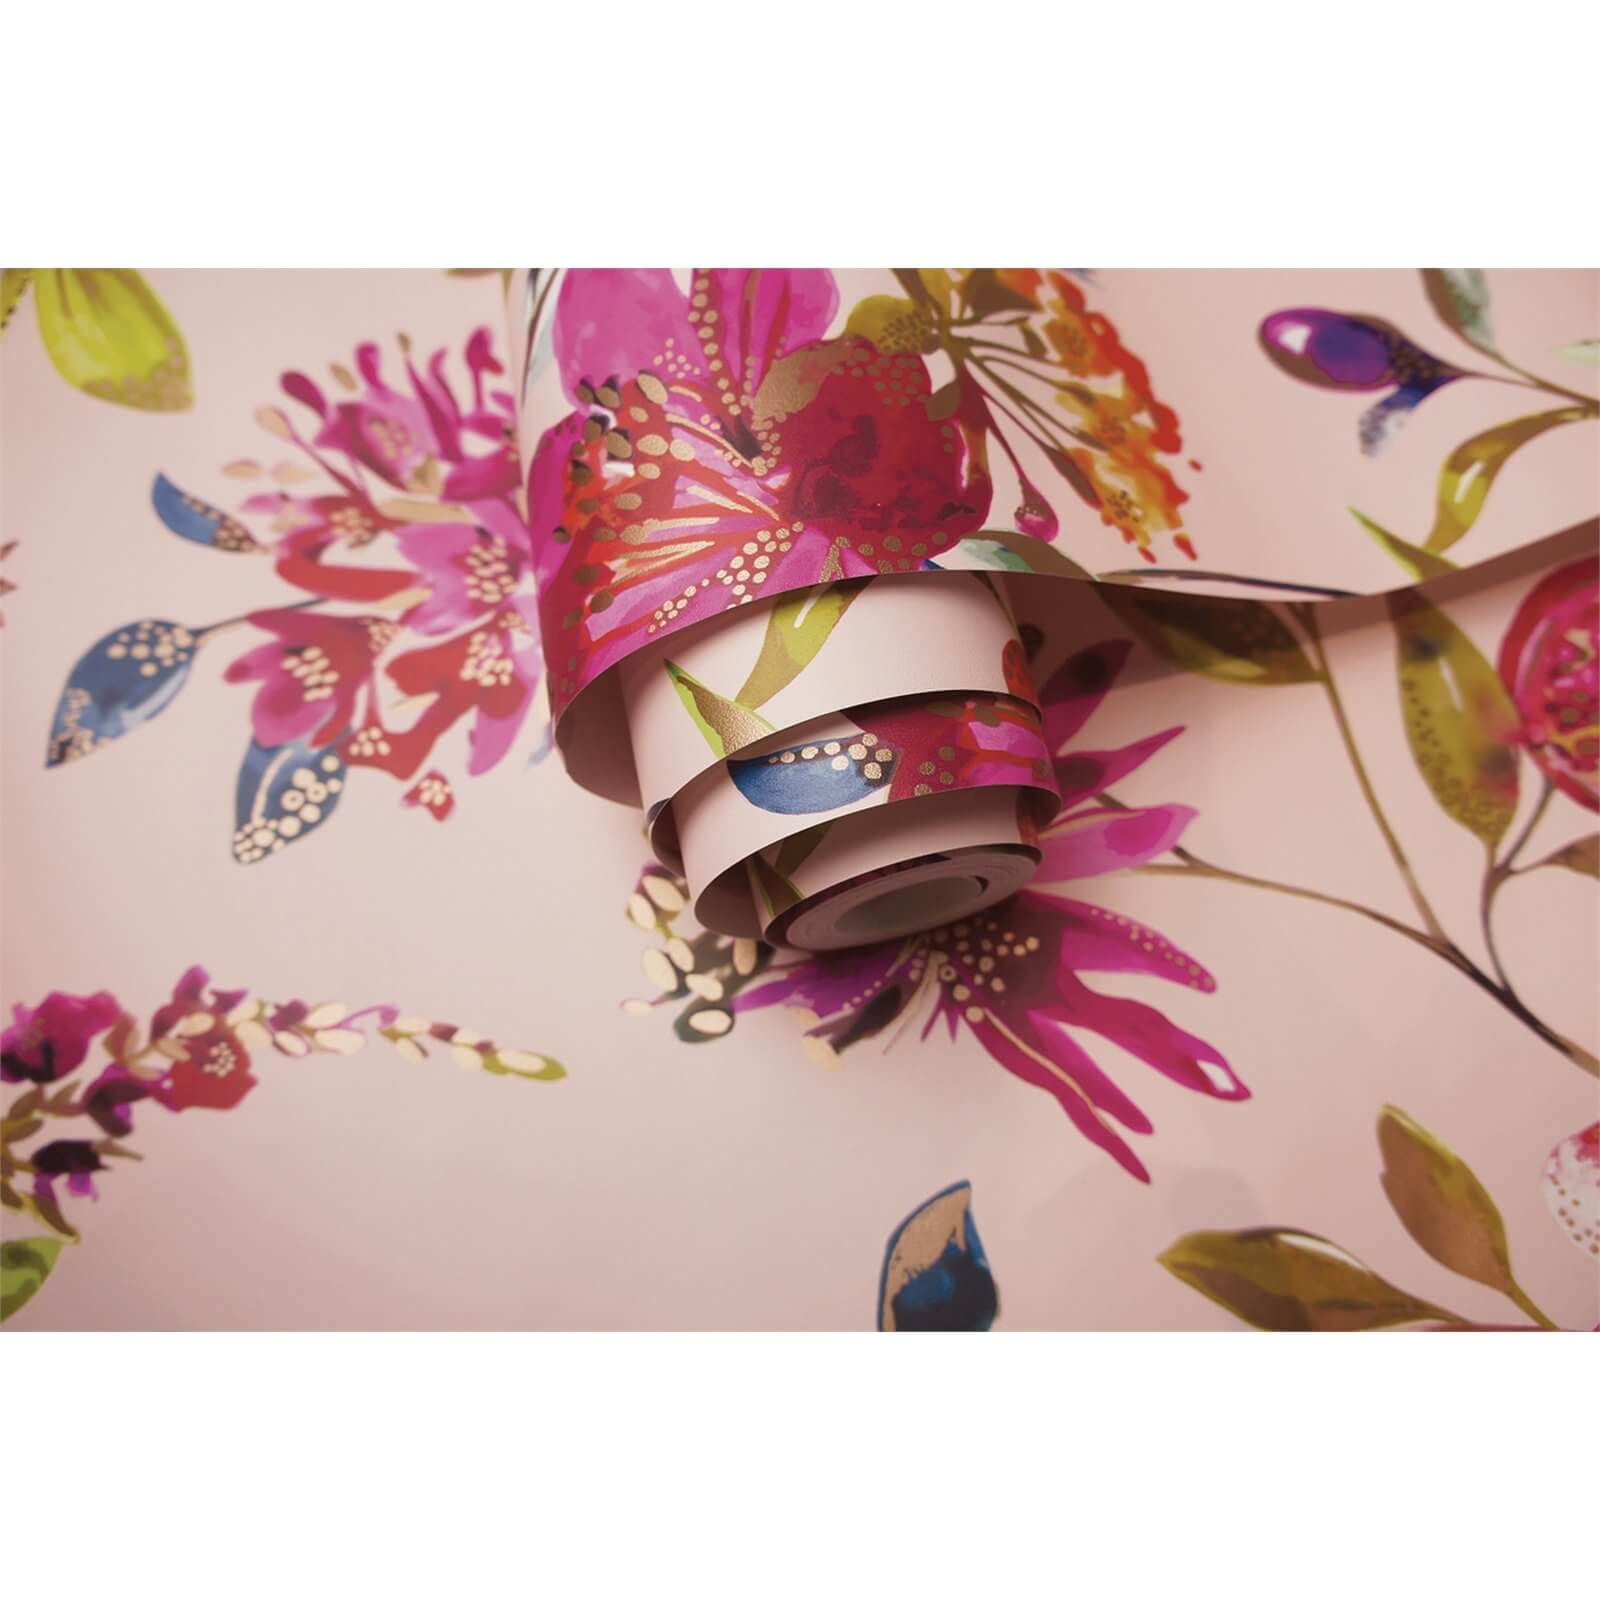 Holden Decor Punica Floral Smooth Metallic Blush Pink Wallpaper